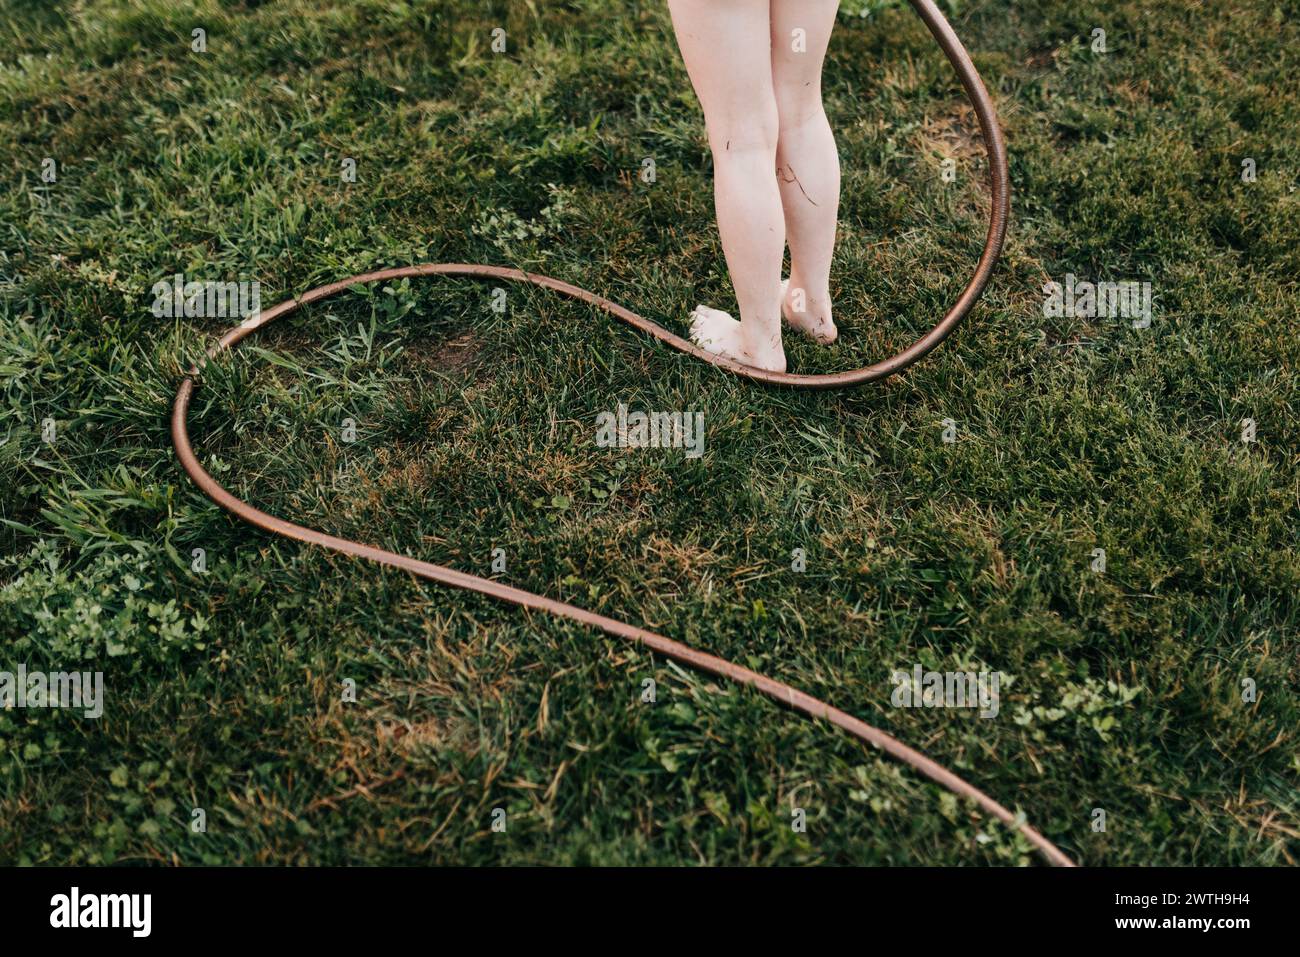 Garden hose trails through grass around young child's feet Stock Photo